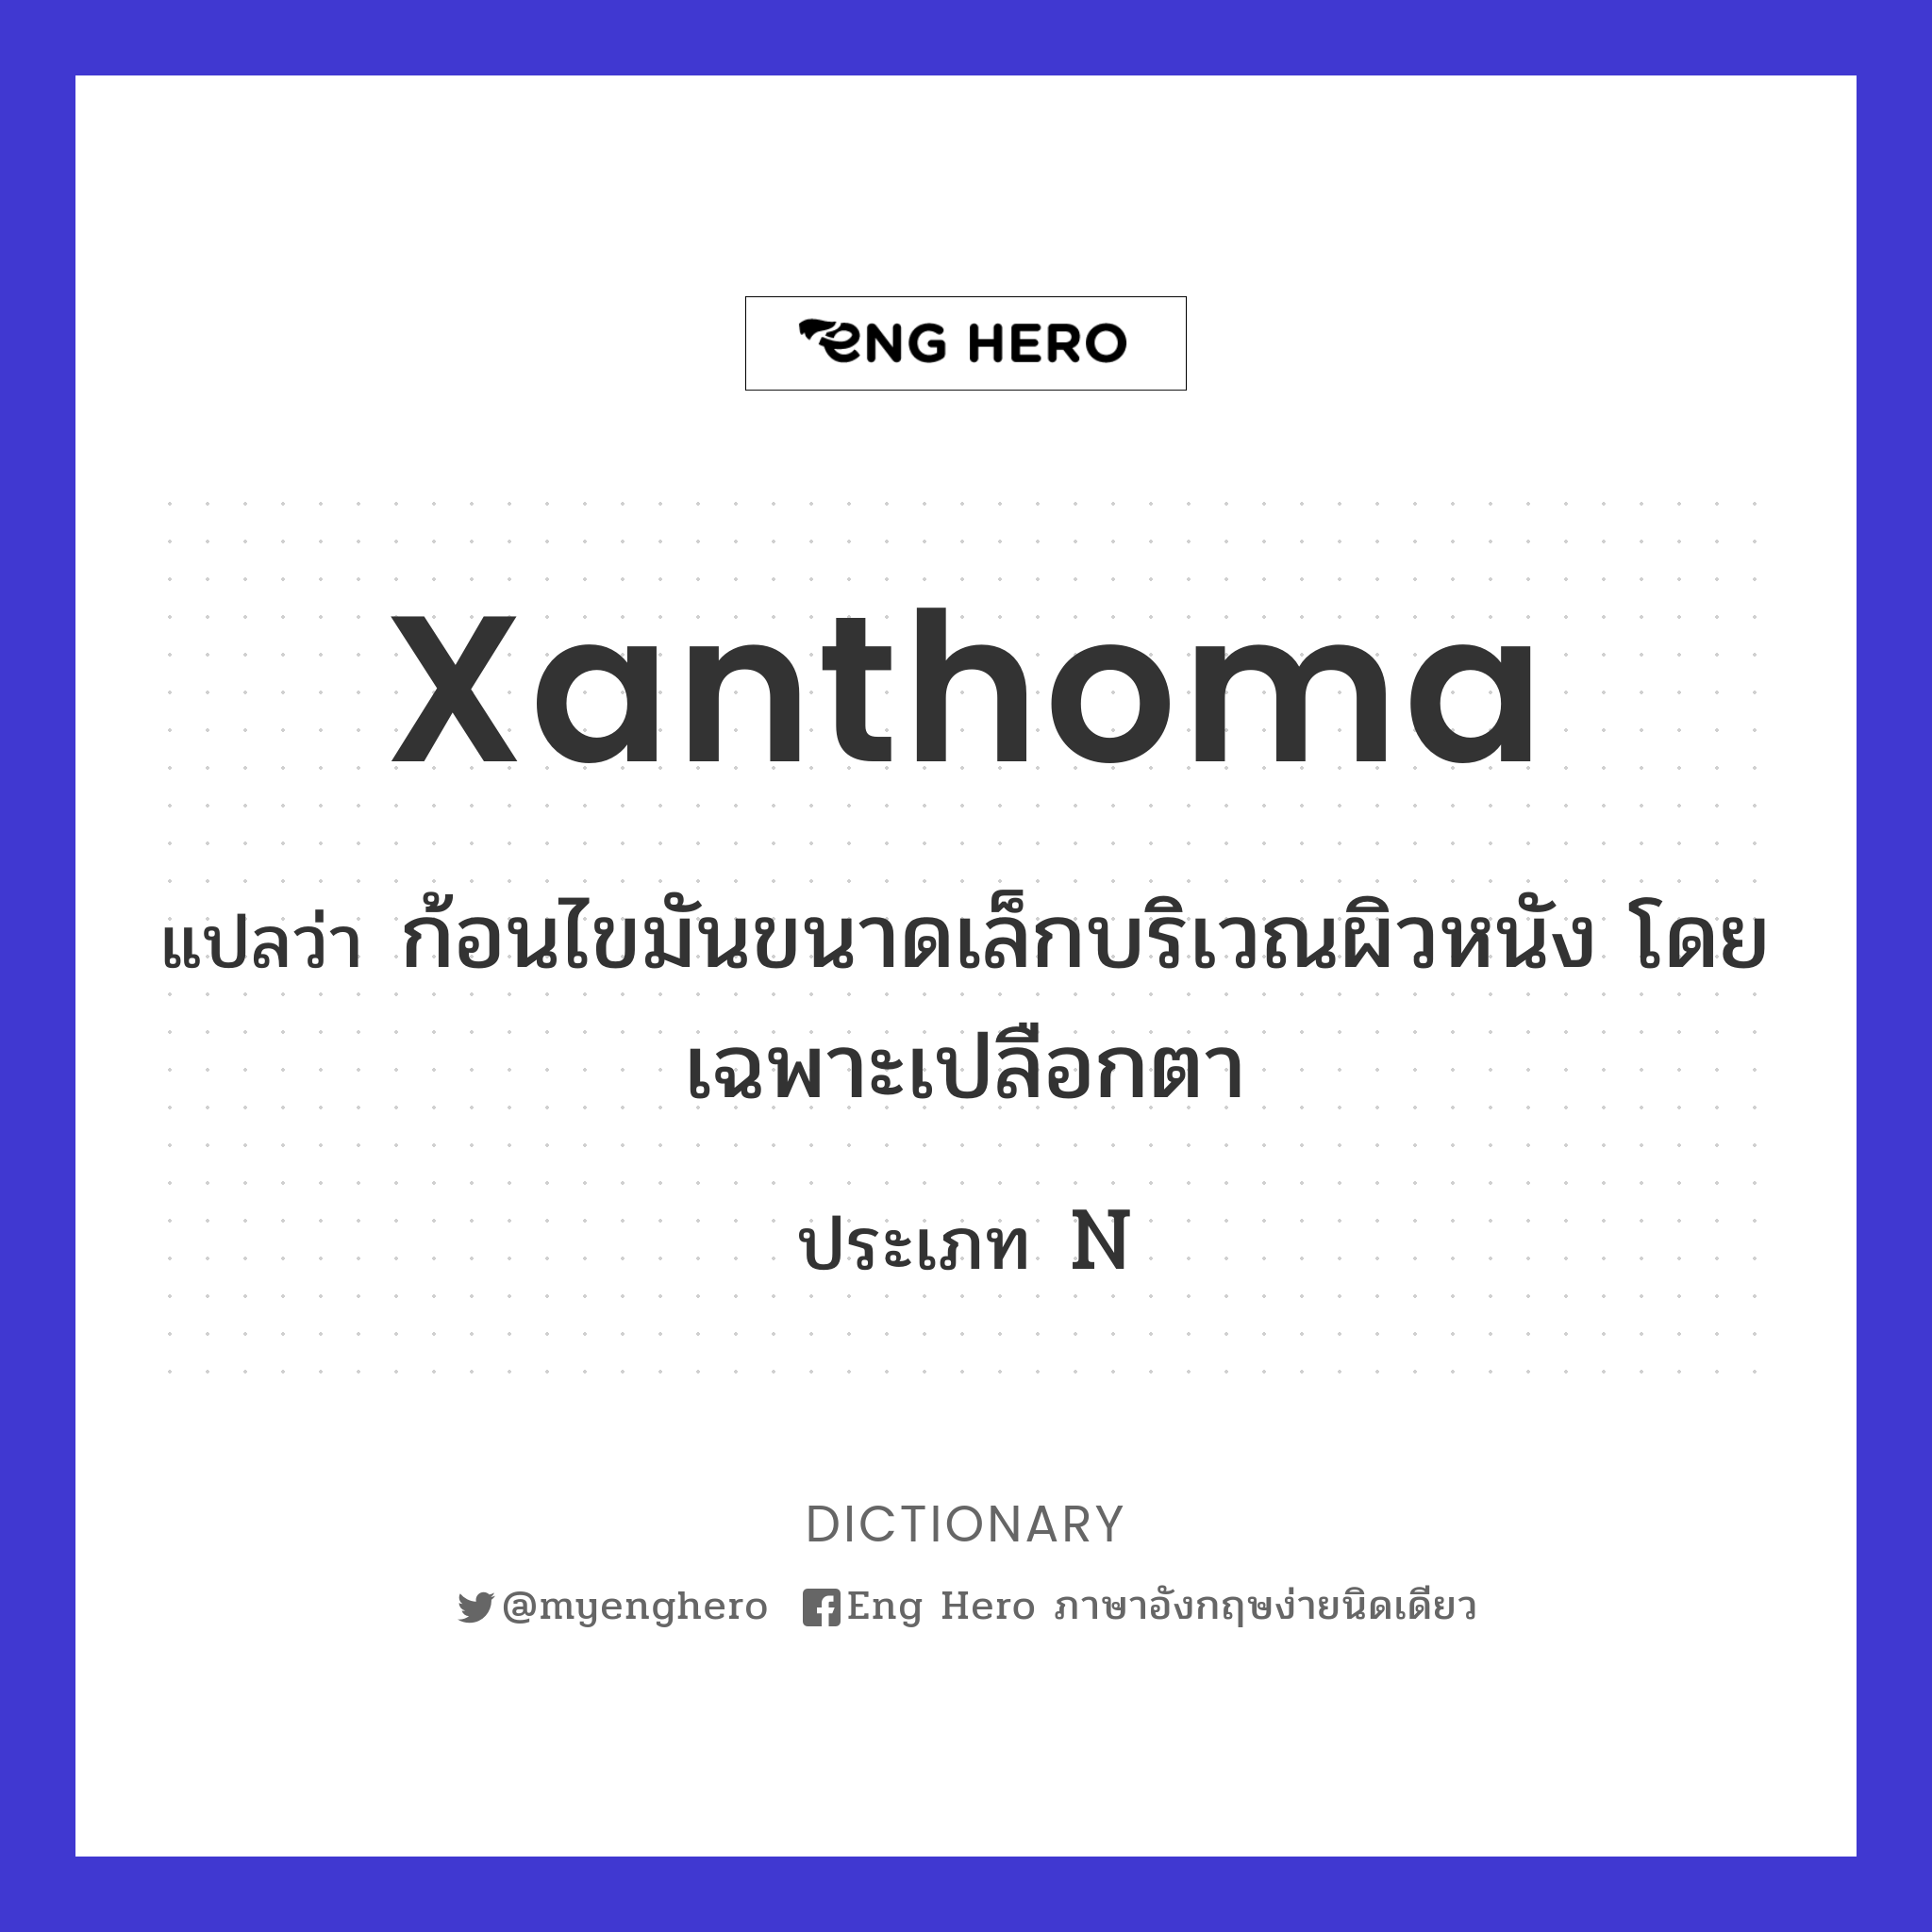 xanthoma